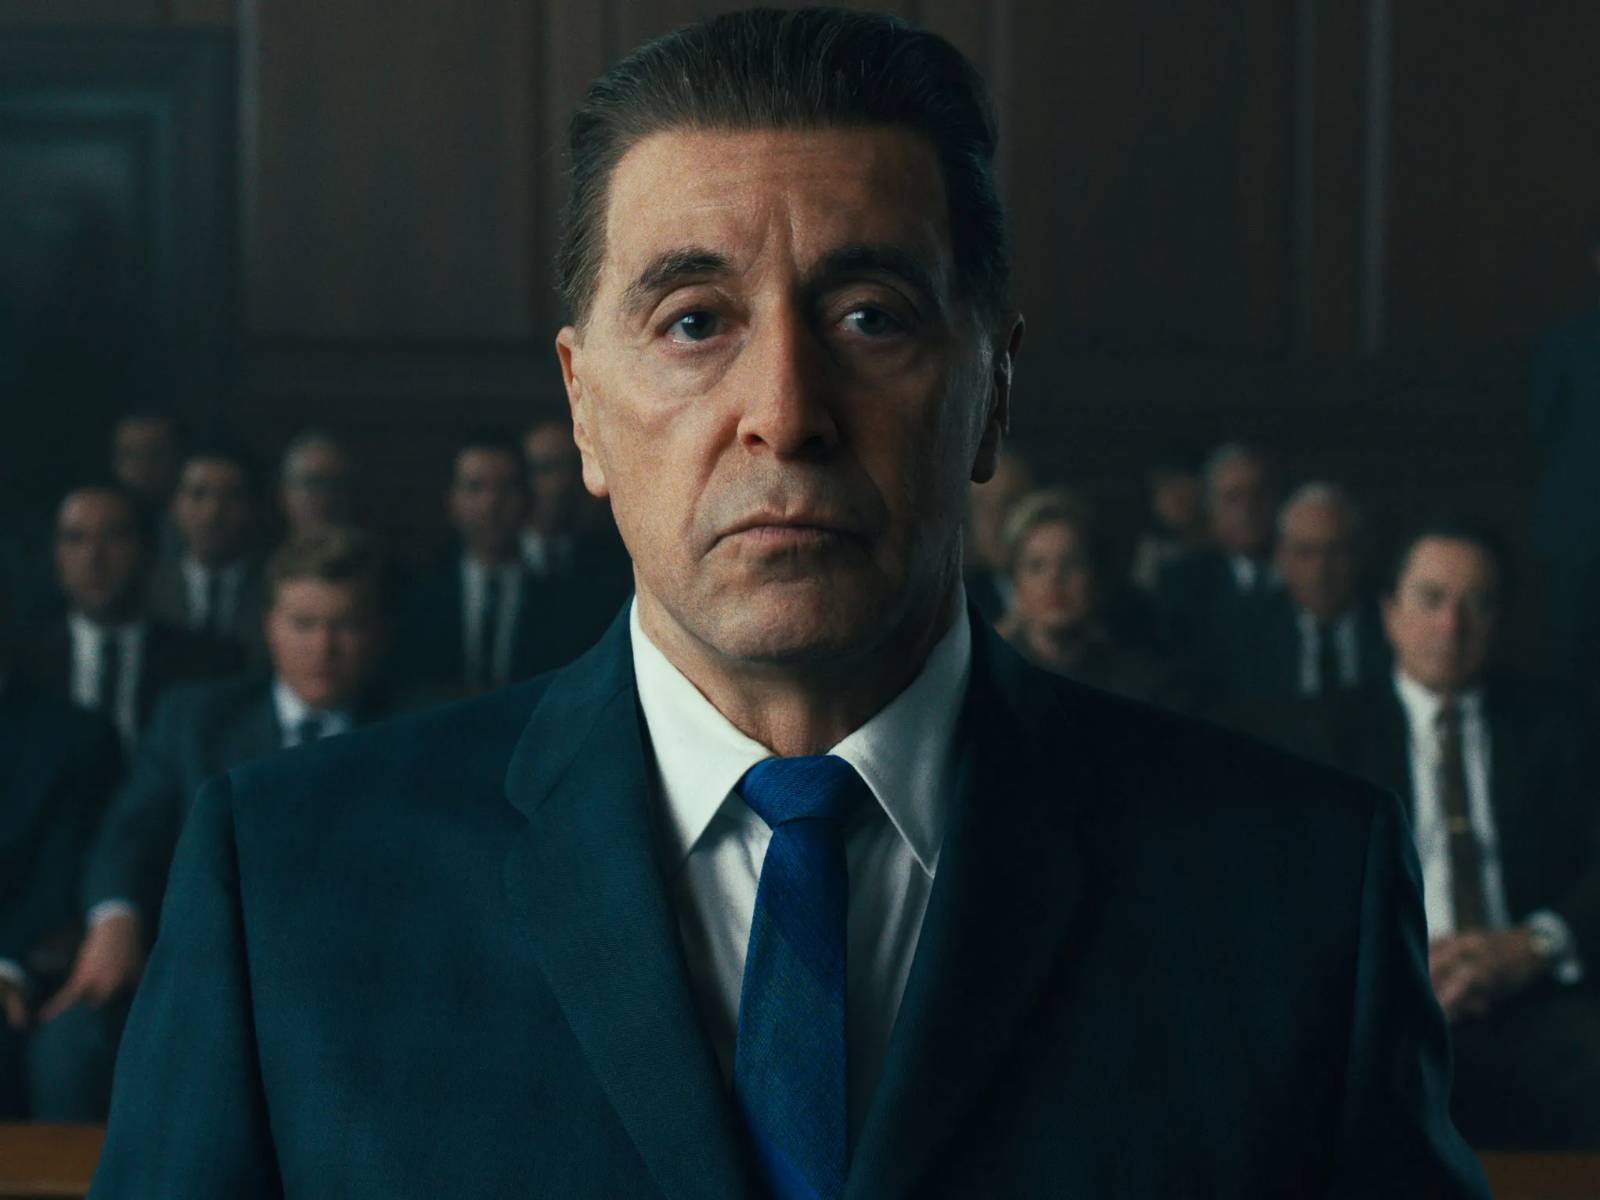 David Mamet to Direct JFK Assassination Mob Drama Starring Al Pacino, Viggo Mortensen, John Travolta & Shia LaBeouf